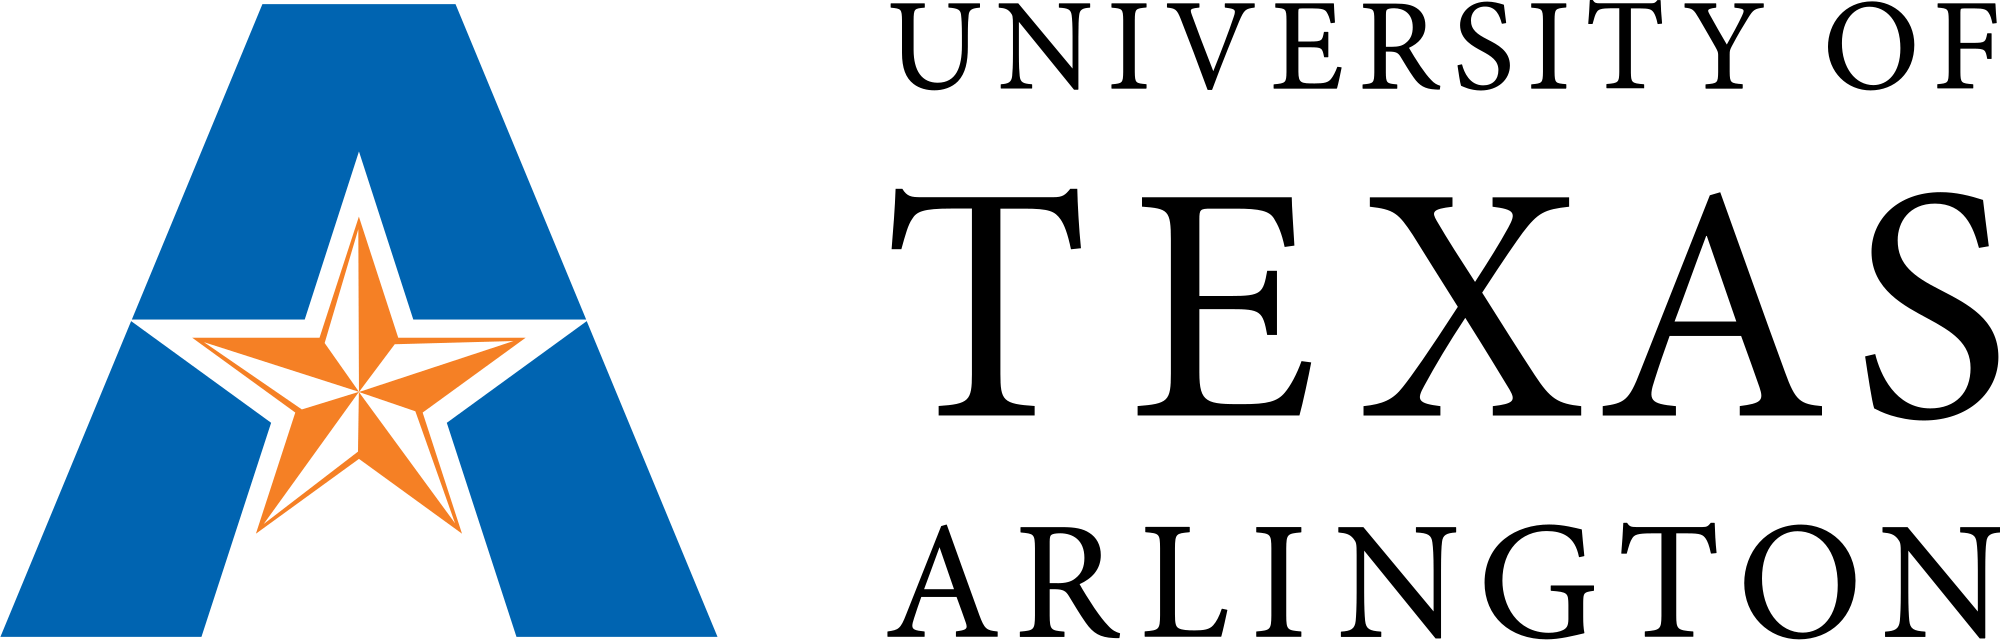 Arlington Logo - File:University of Texas at Arlington logo.svg - Wikimedia Commons